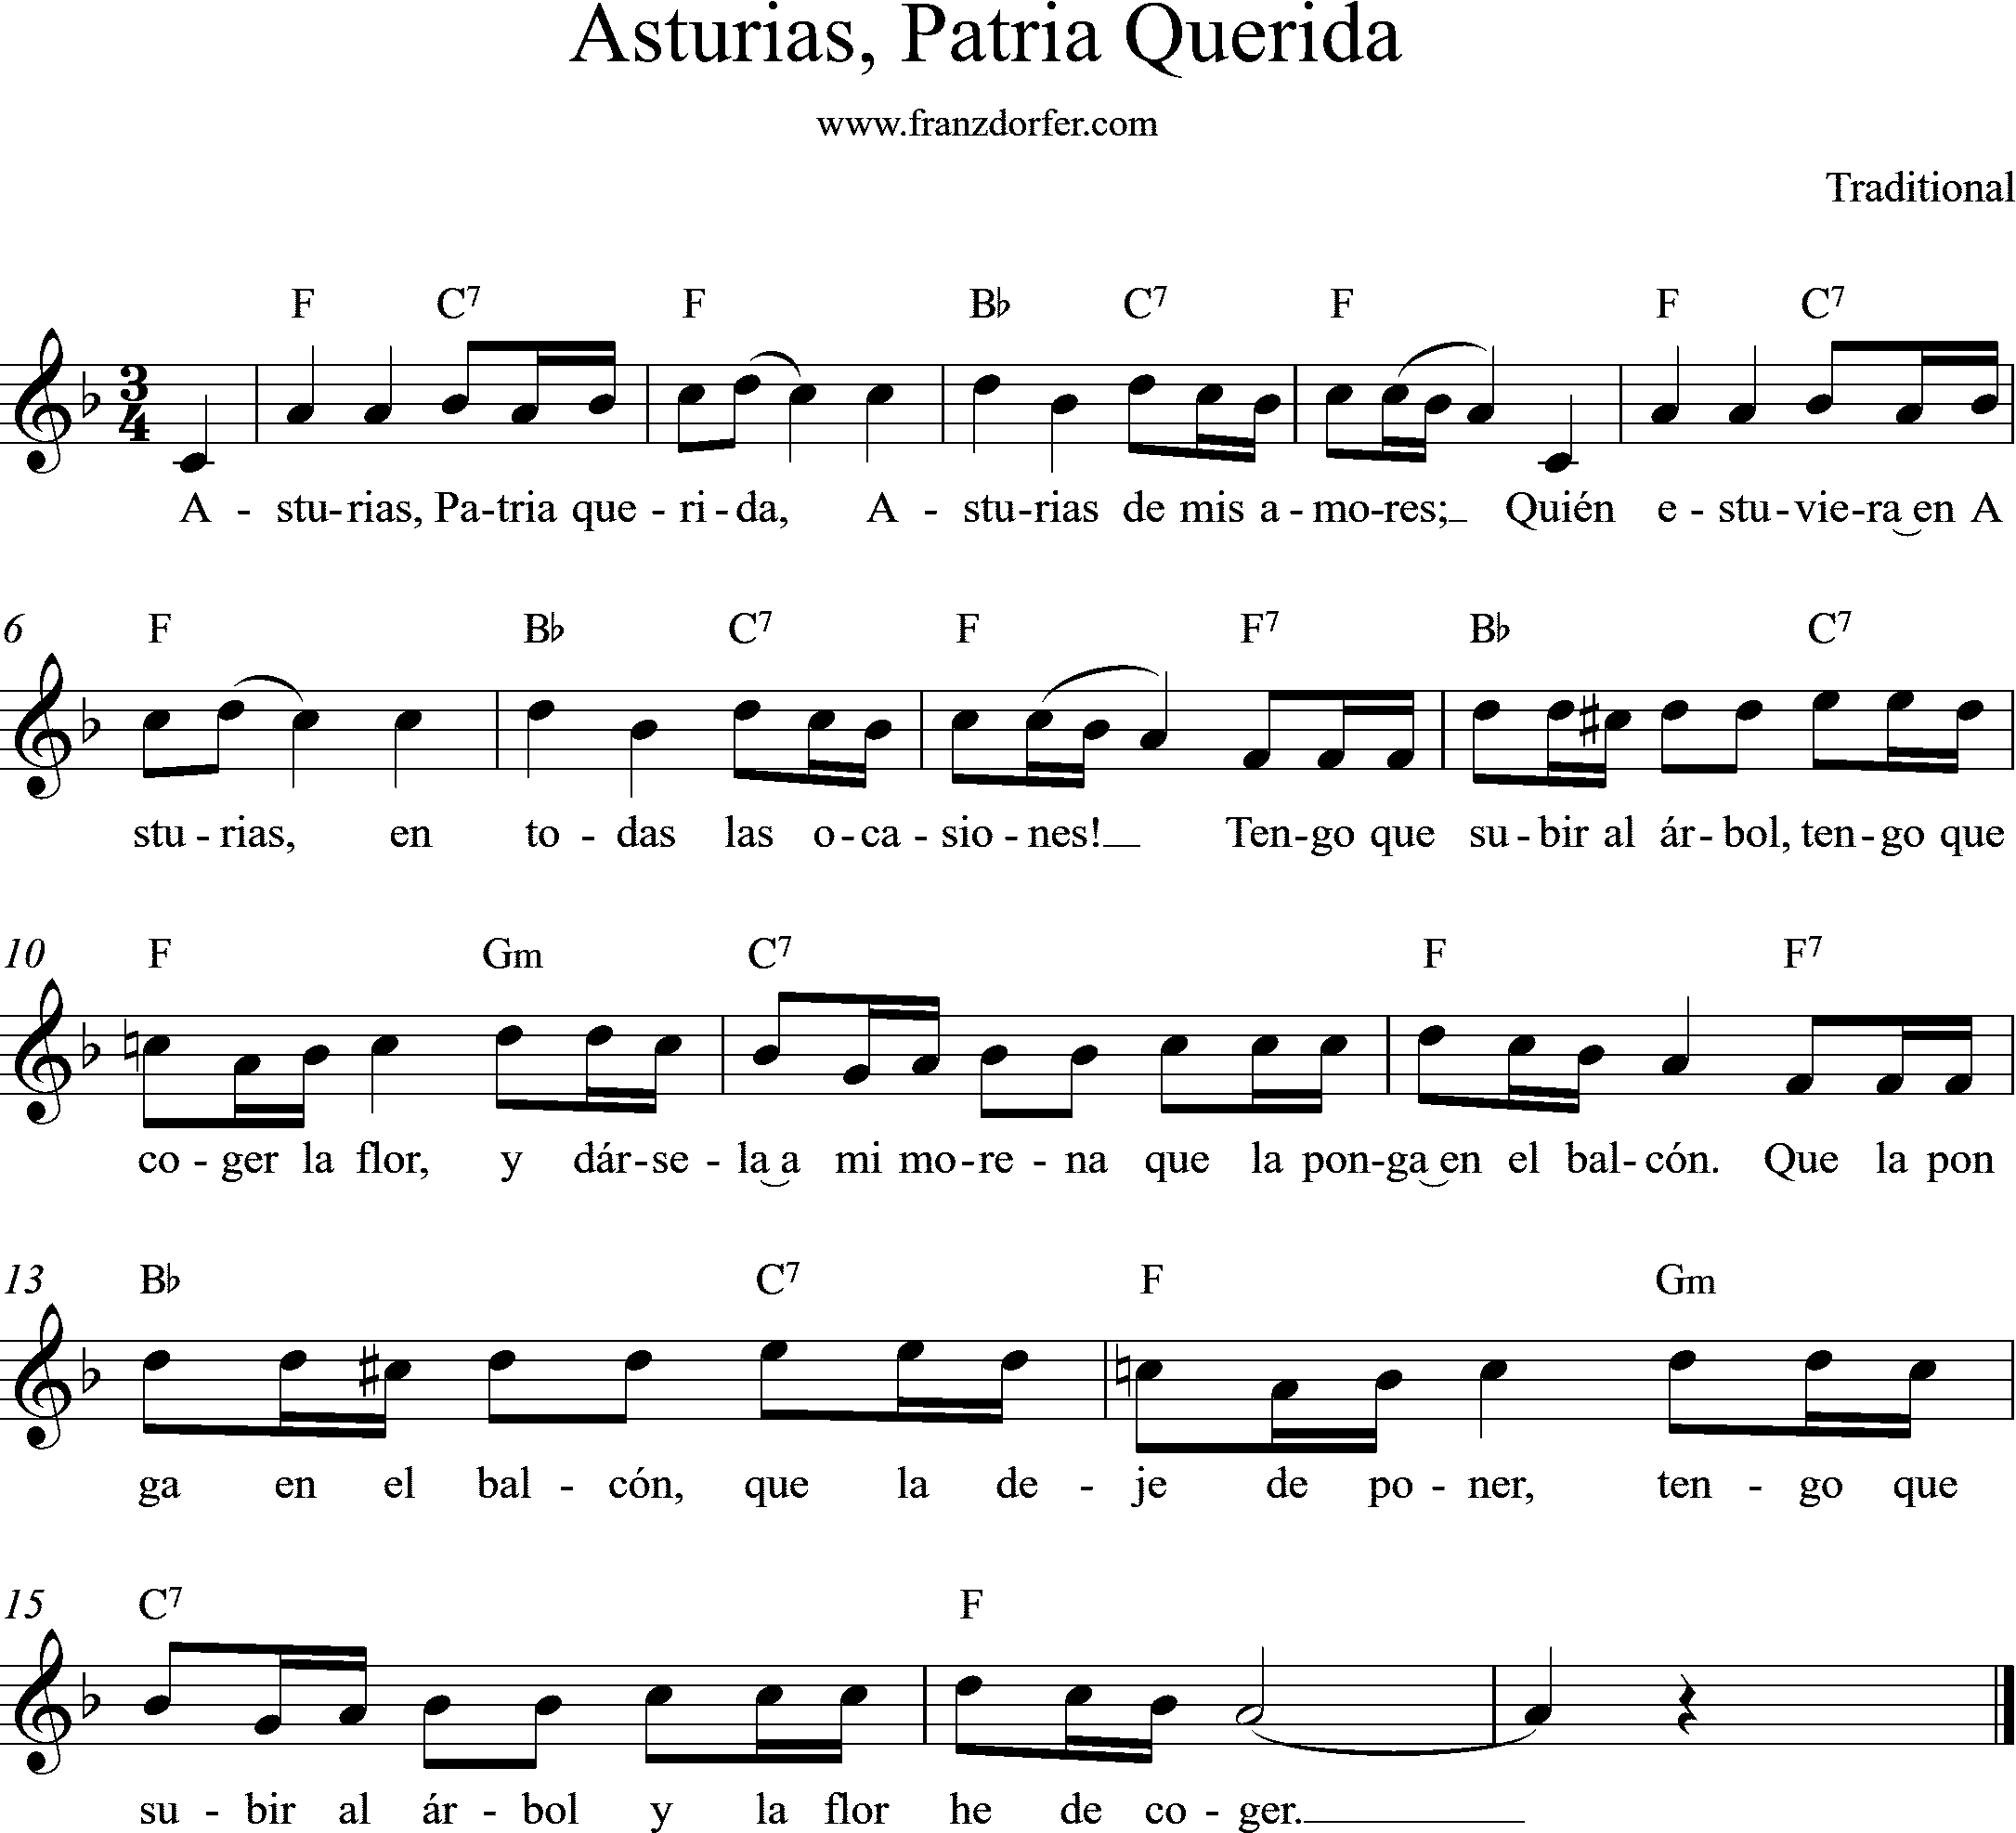 Sheetmusic, Chords, Lyrics- Asturias Patria Querida